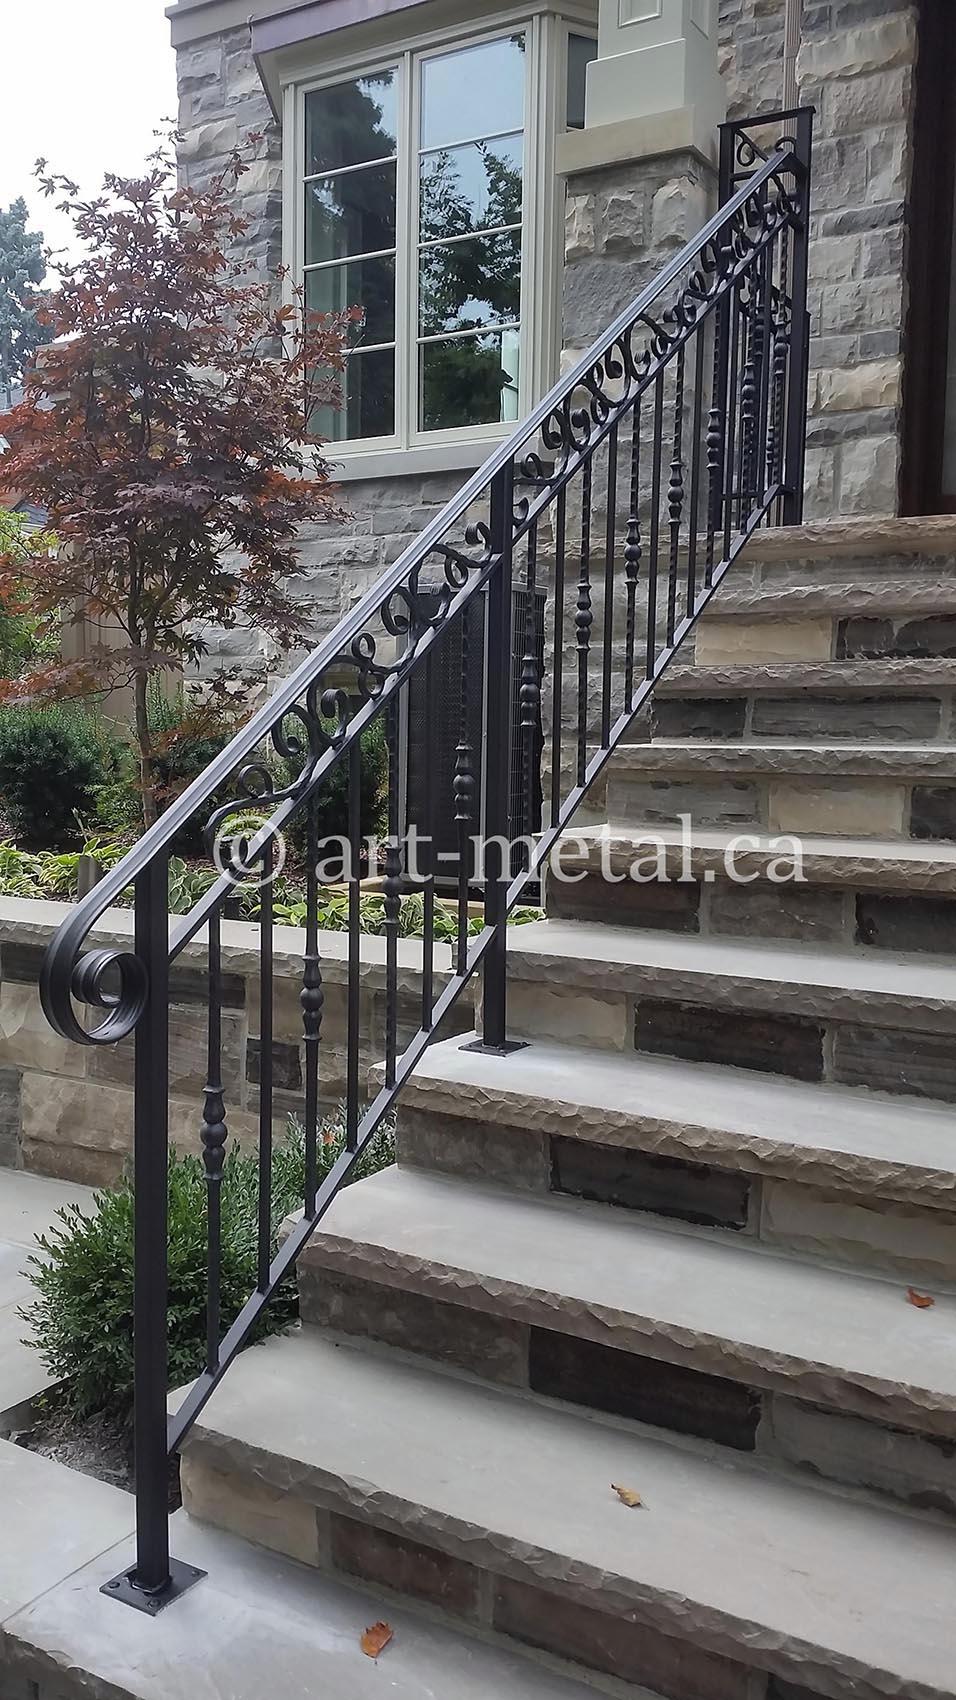 Exterior Railings & Handrails for Stairs, Porches, Decks